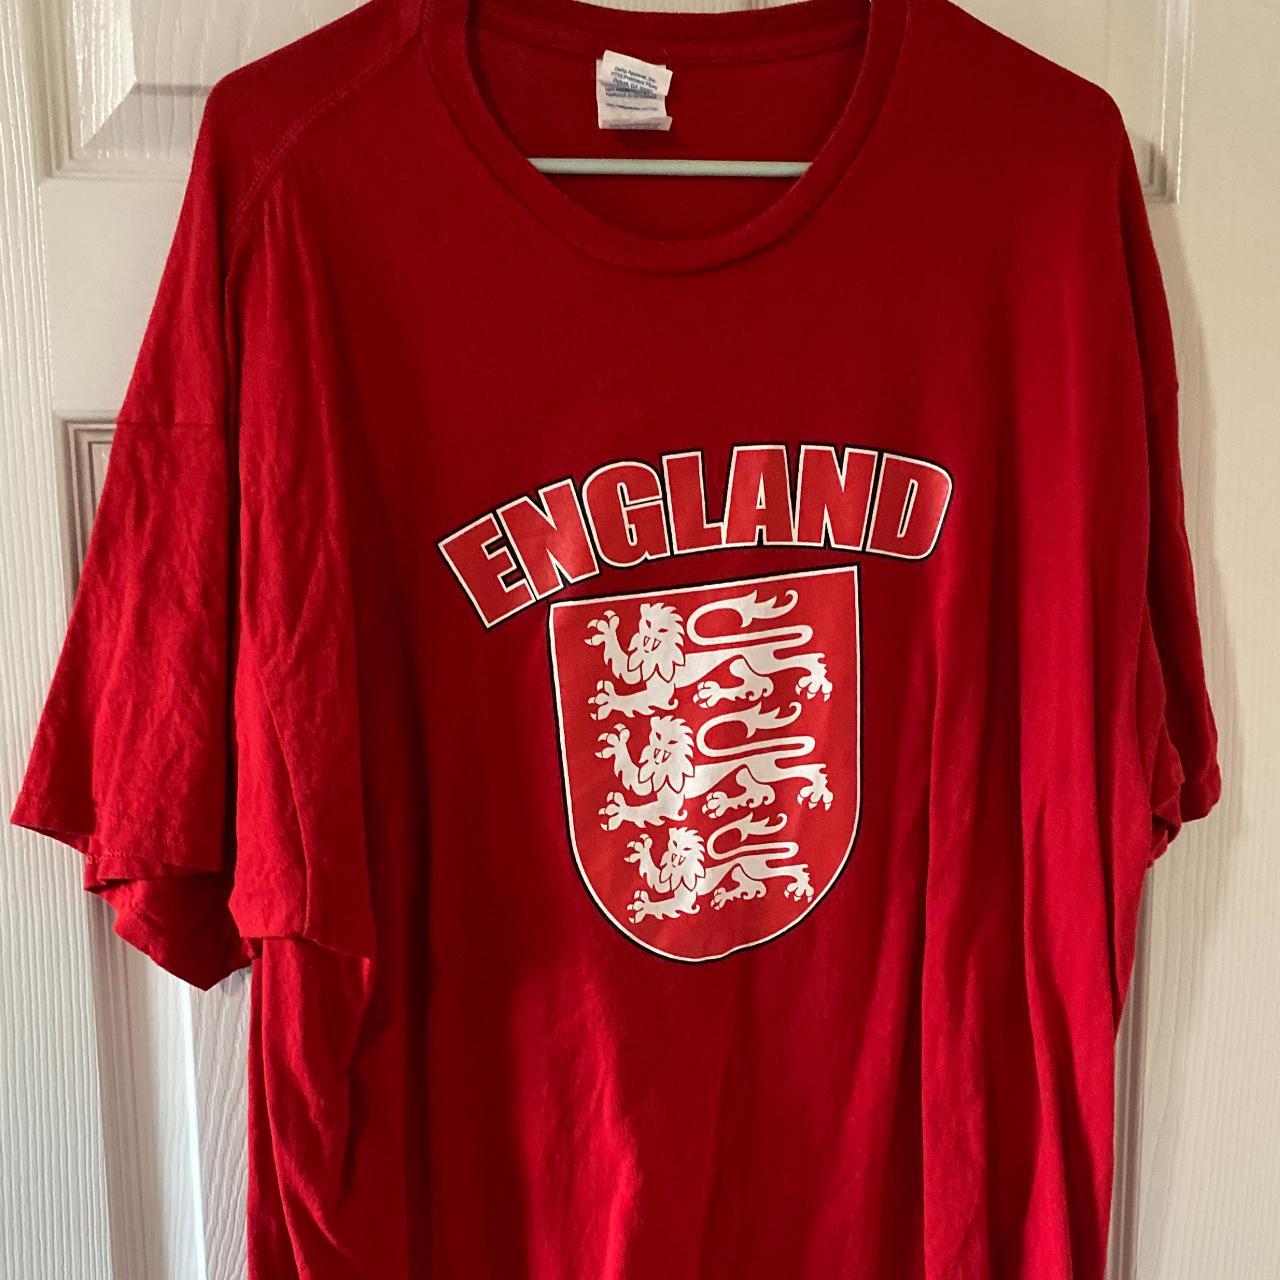 Product Image 1 - England Lion Crest Graphic T-Shirt
Delta